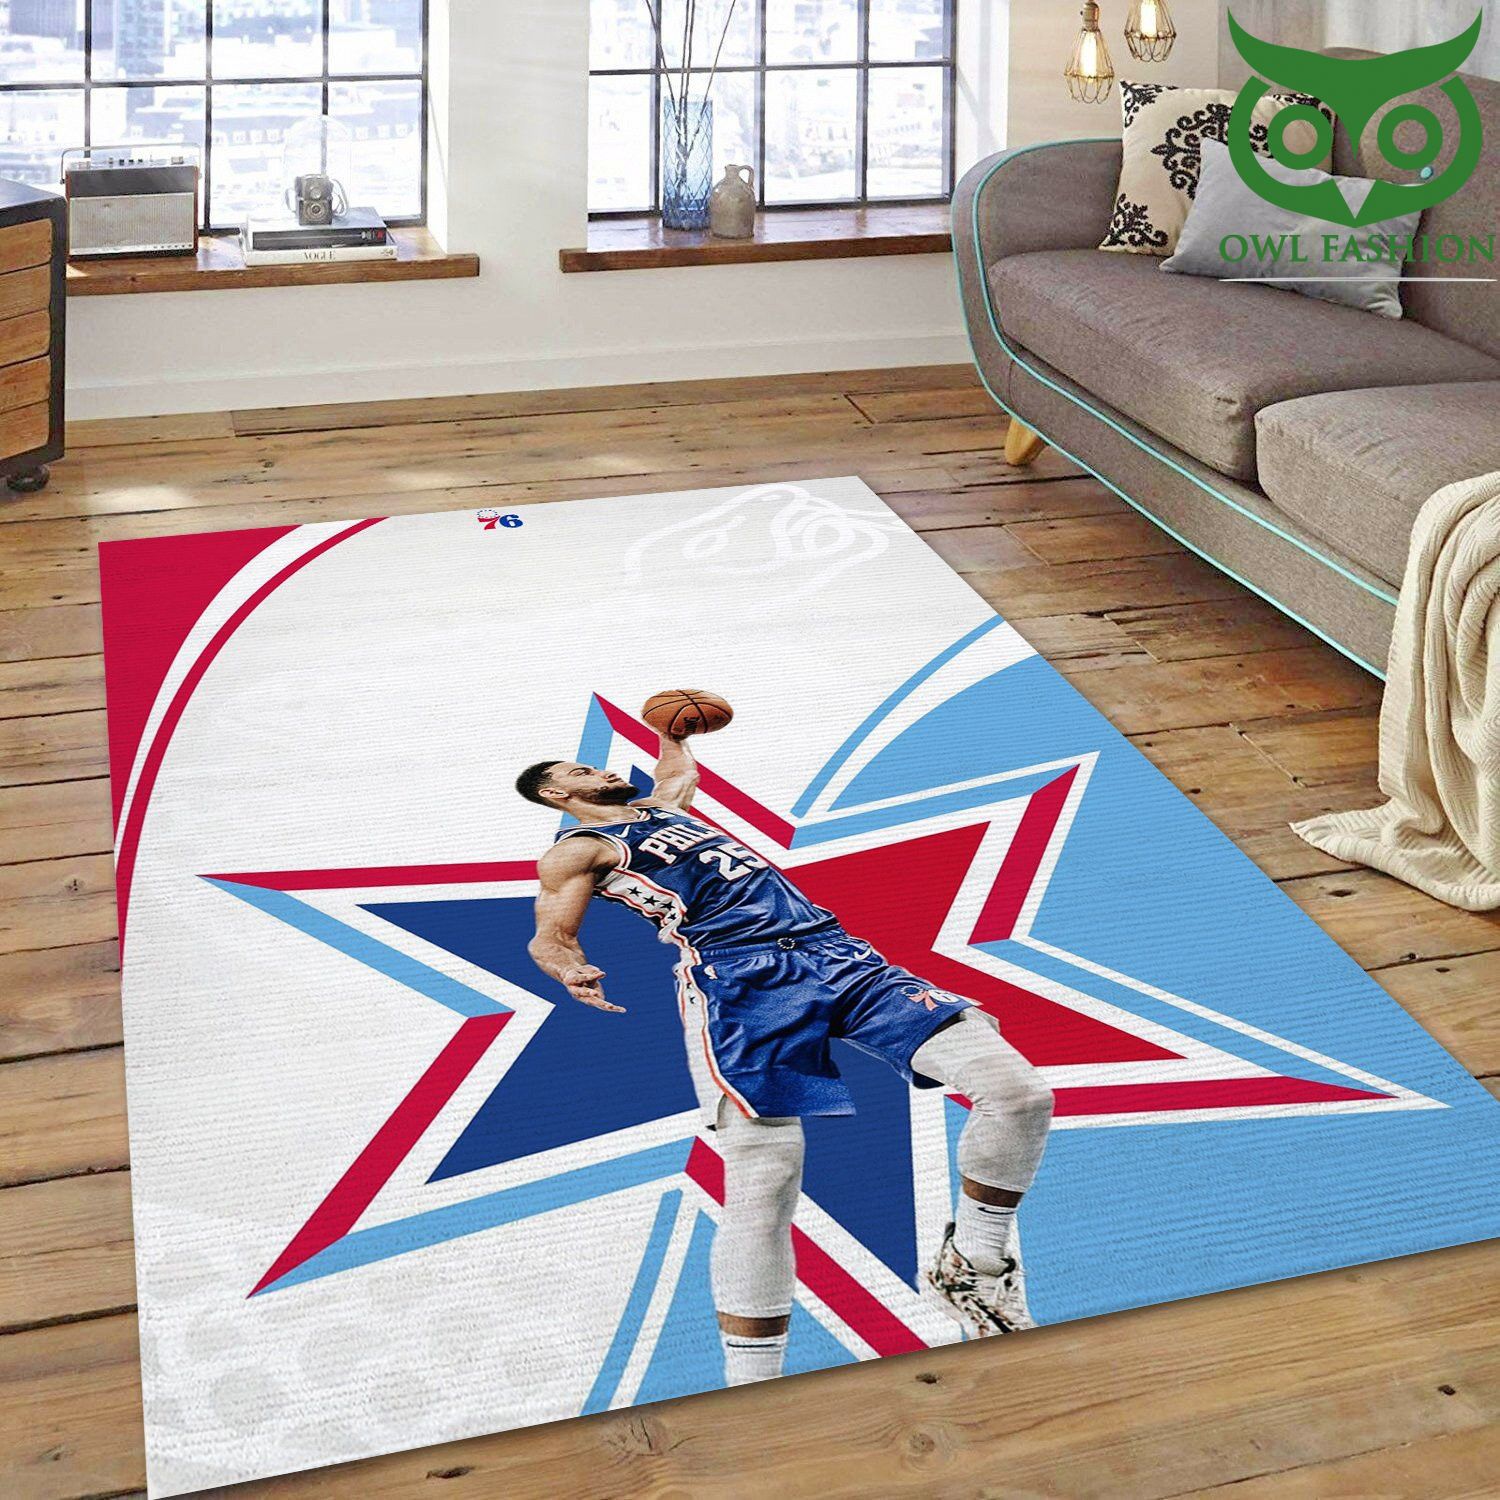 NBA Philadephia 76ers Ben Simons Area room decorate floor carpet rug 